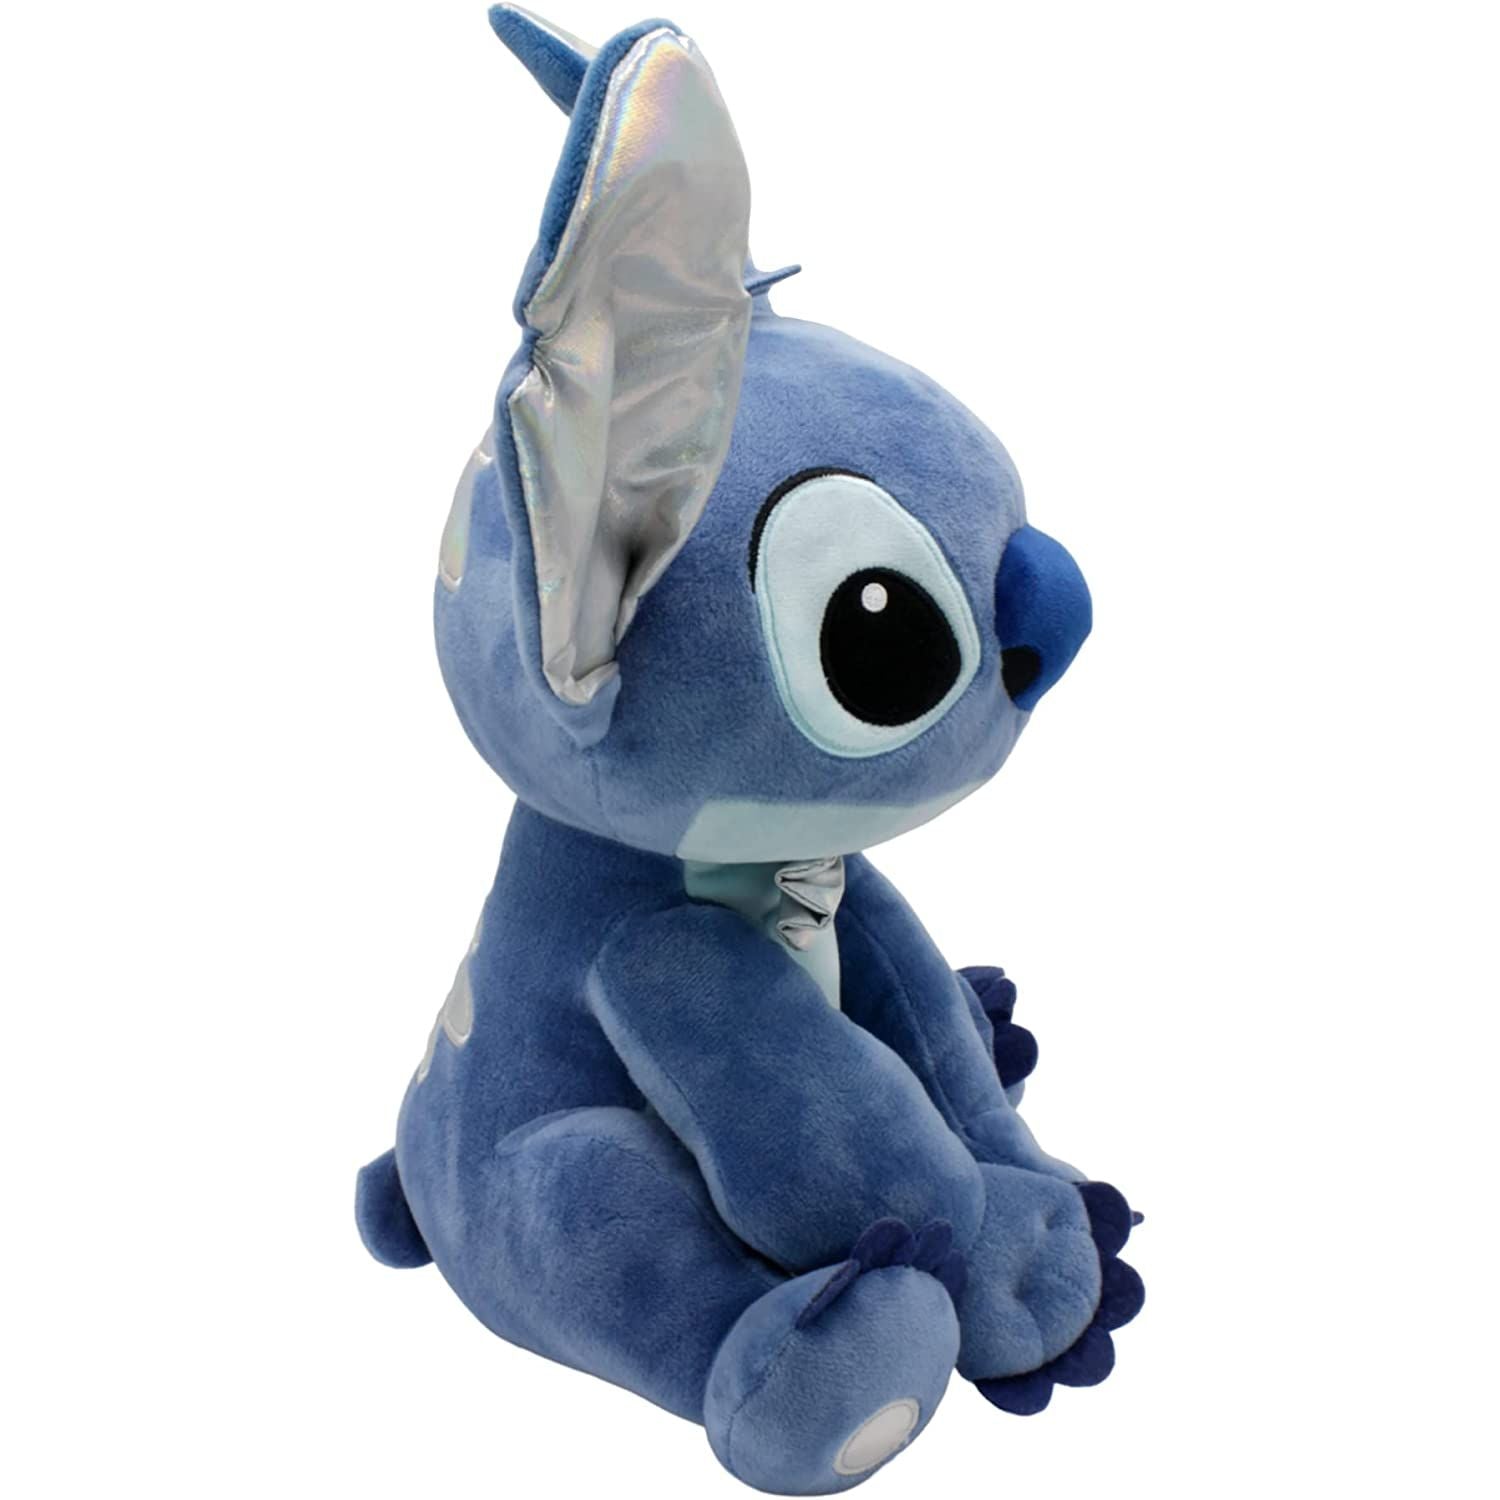 Disney Collection Disney 100 Stitch Plush Doll